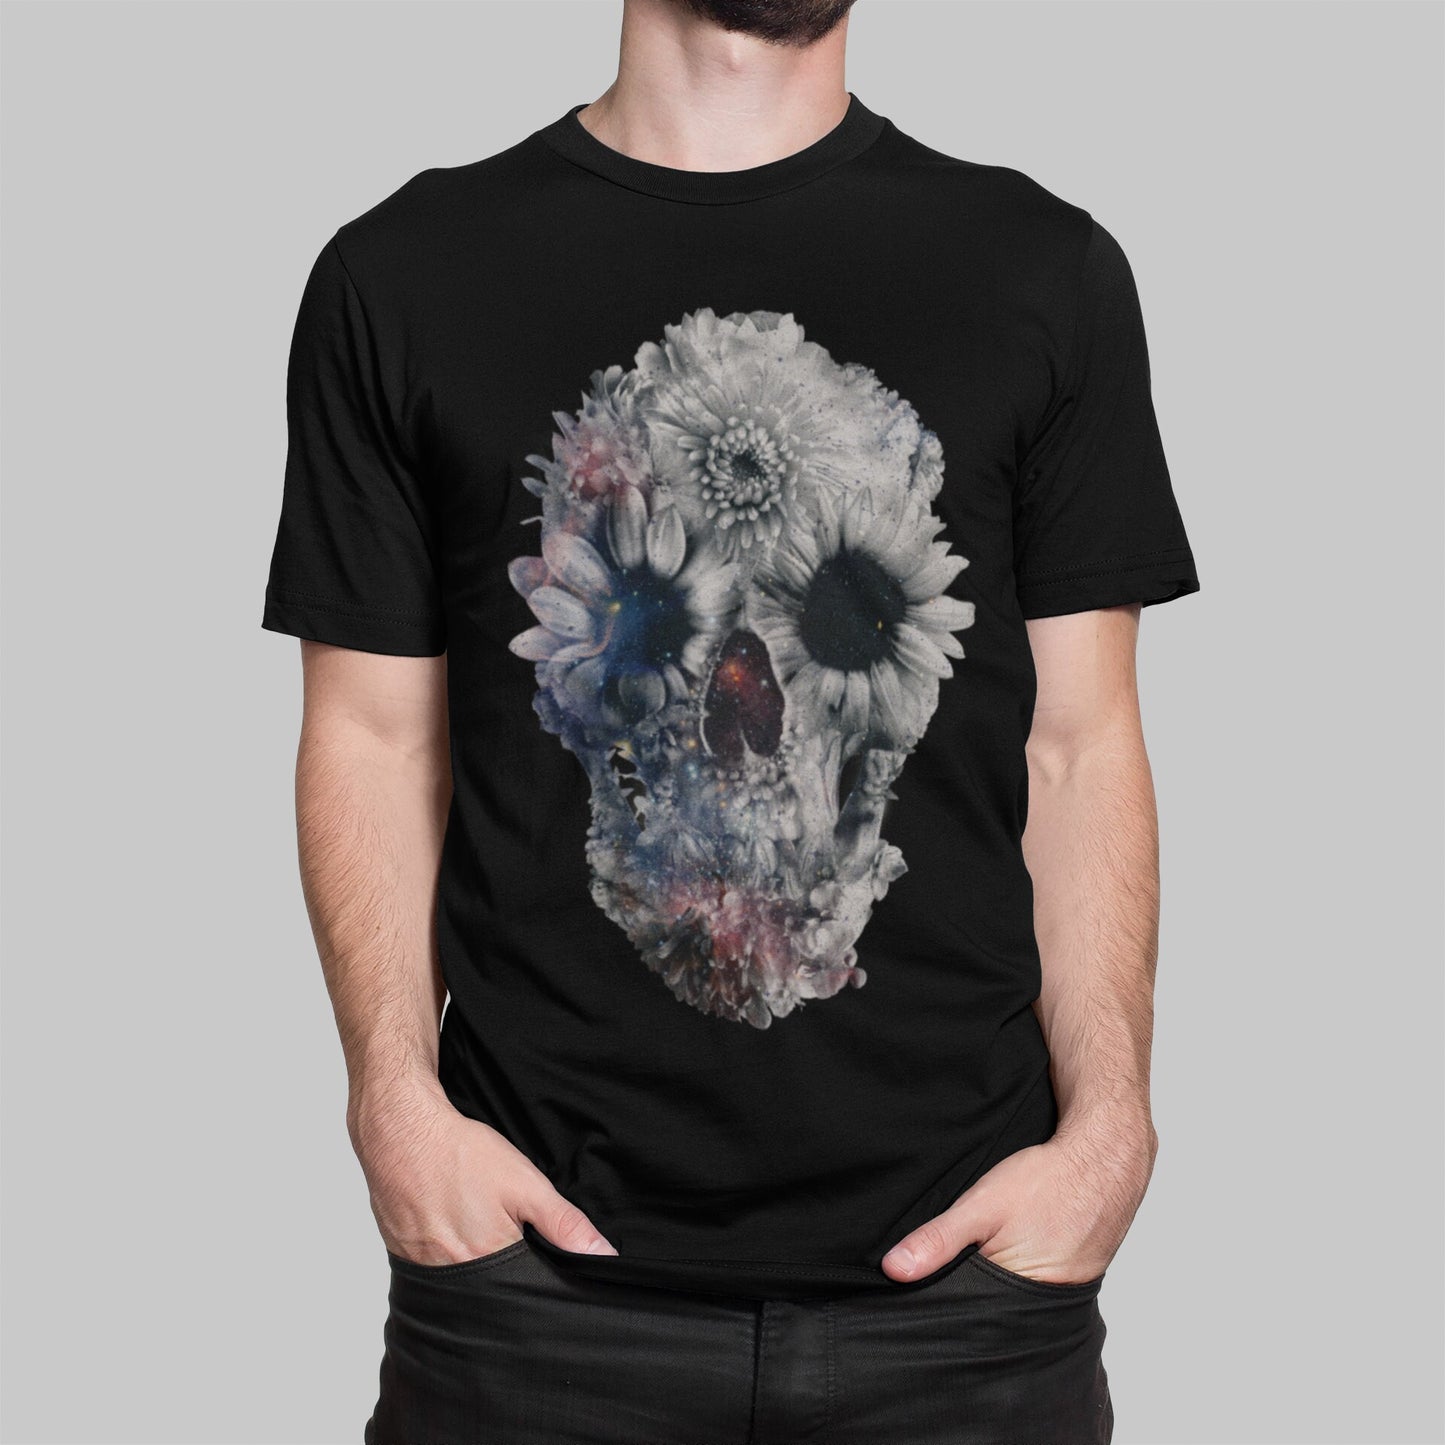 Floral Skull Men's T-shirt, Sugar Skull Art Print Mens Tshirt, Black And White Mens Graphic Tees, Bella Canvas Skull Print Gift For Him